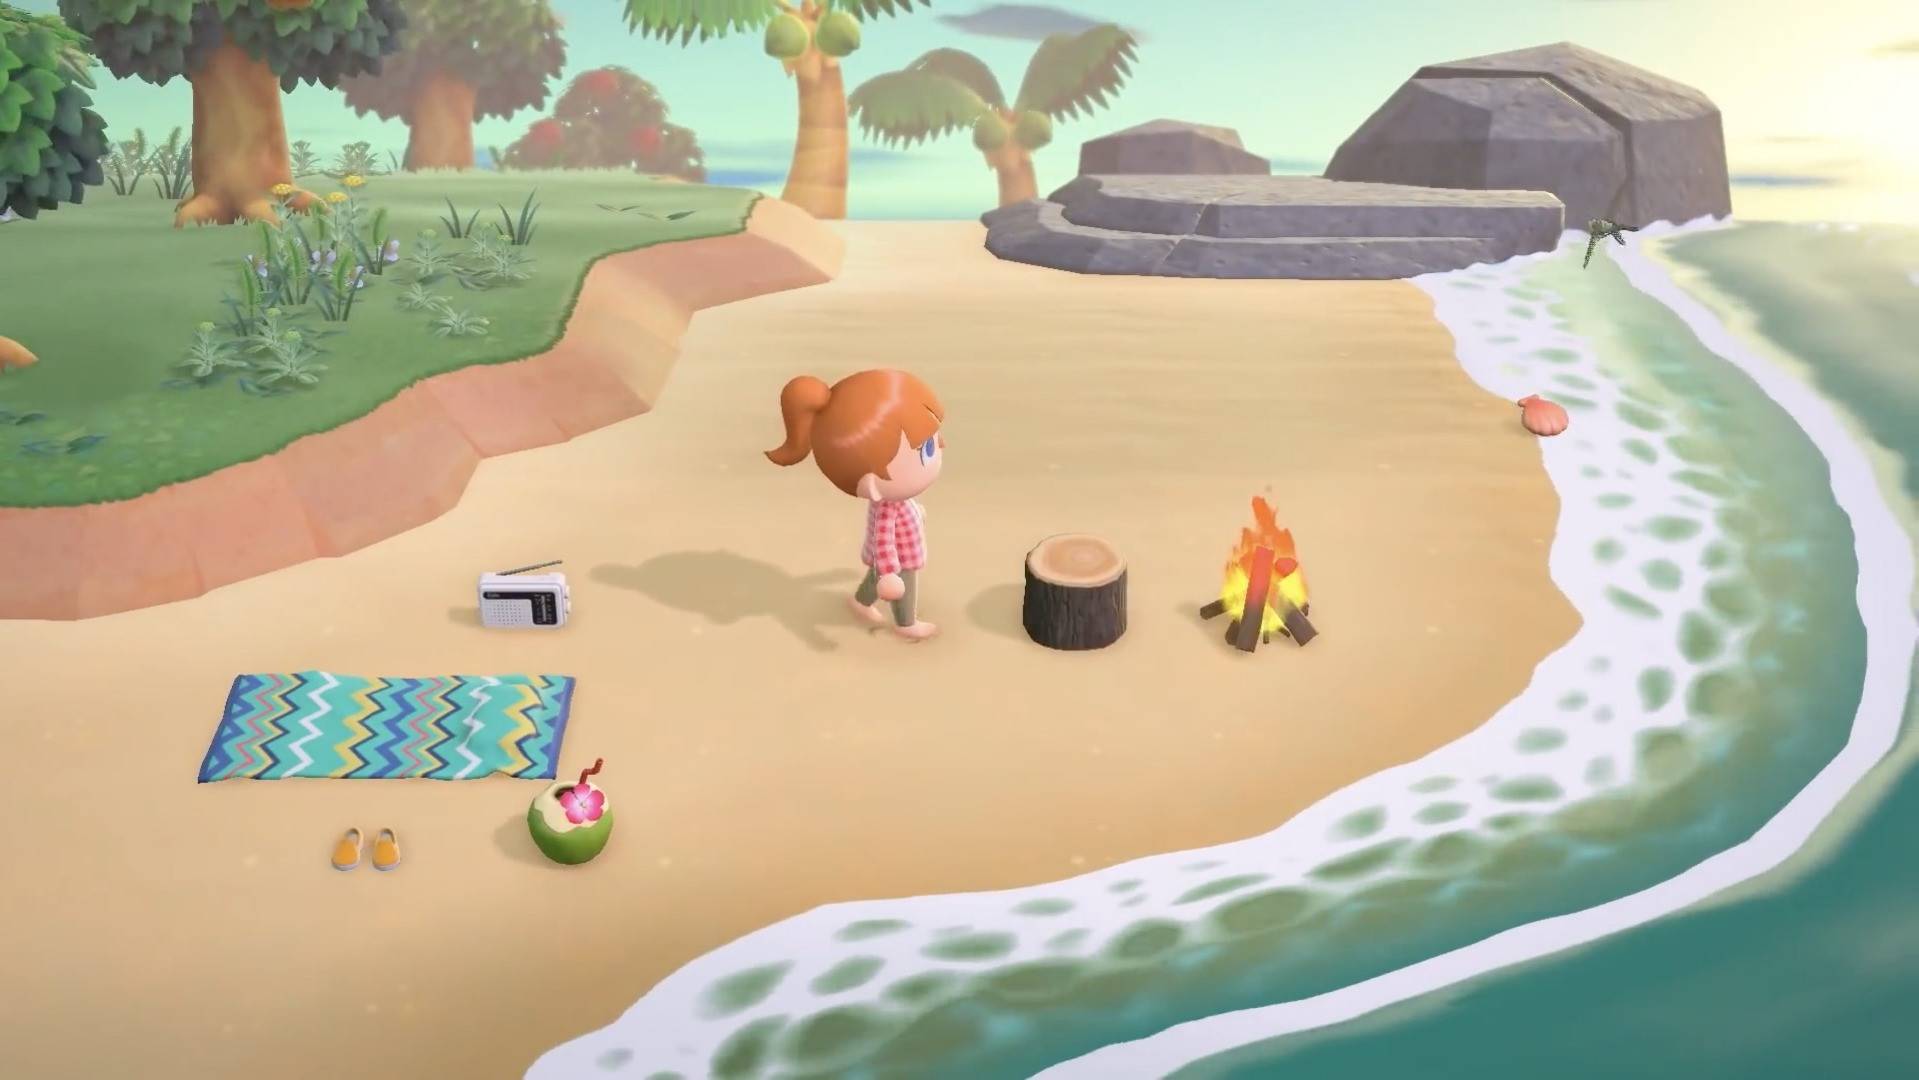 Animal Crossing: New Horizons (SWITCH) pas cher - Prix 21,49€